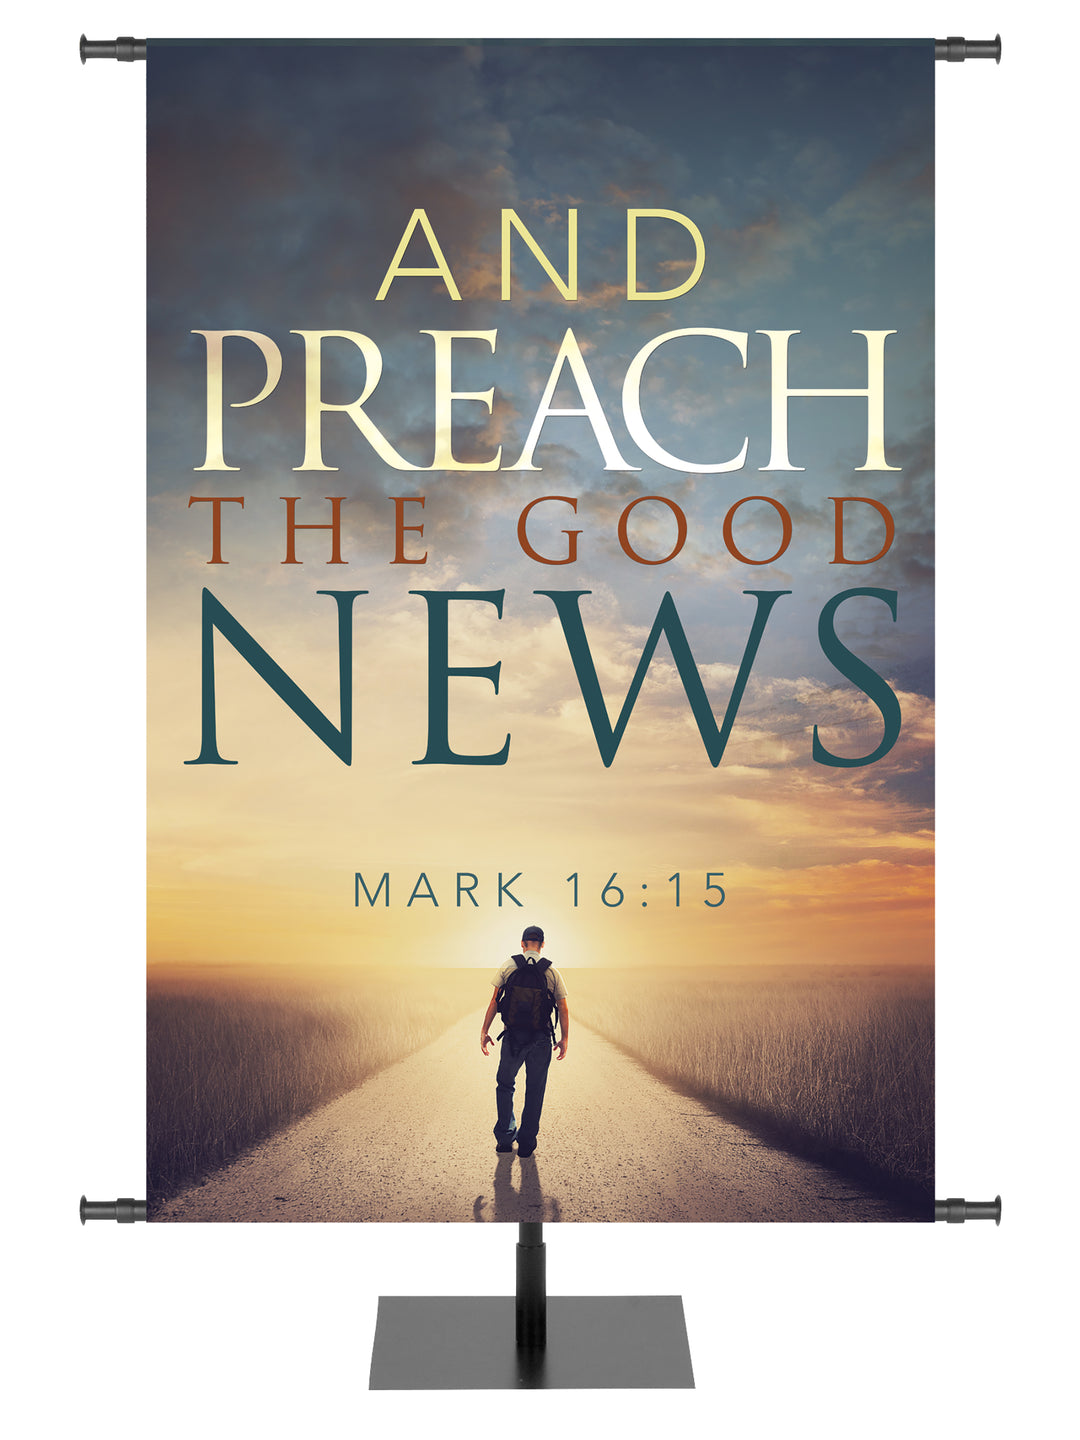 Preach The Good News